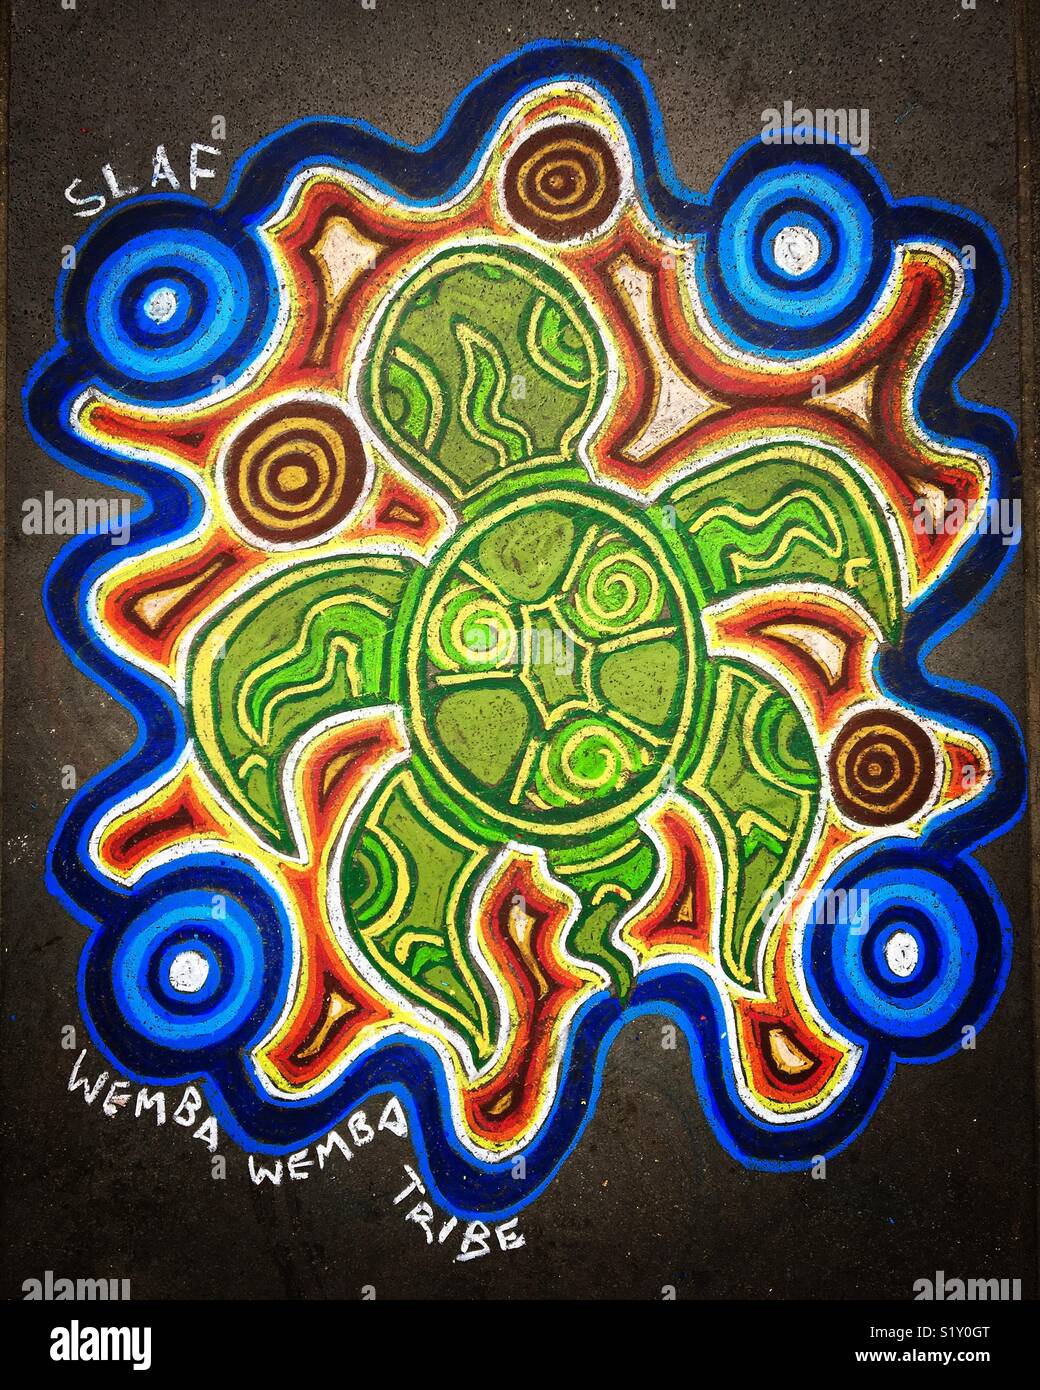 aboriginal indigenous australian chalk art or turtle on sidewalk S1Y0GT